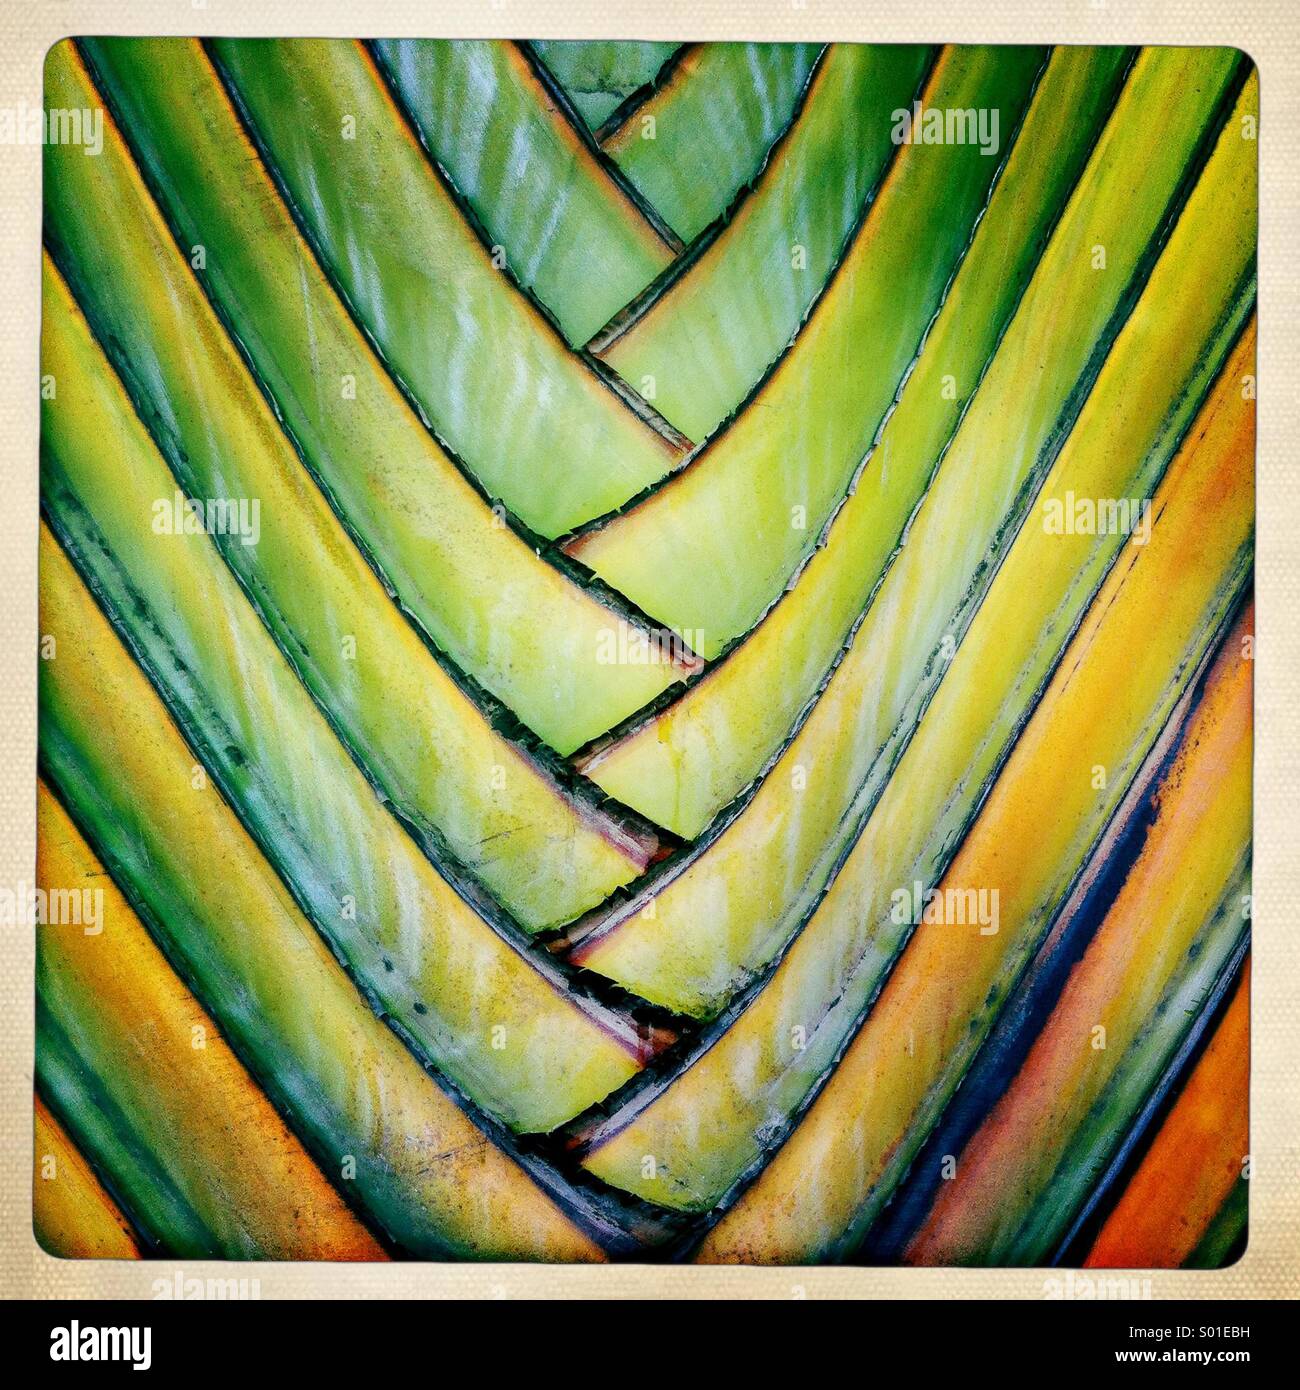 Resumen detalles coloridos de palma ornamental. Foto de stock